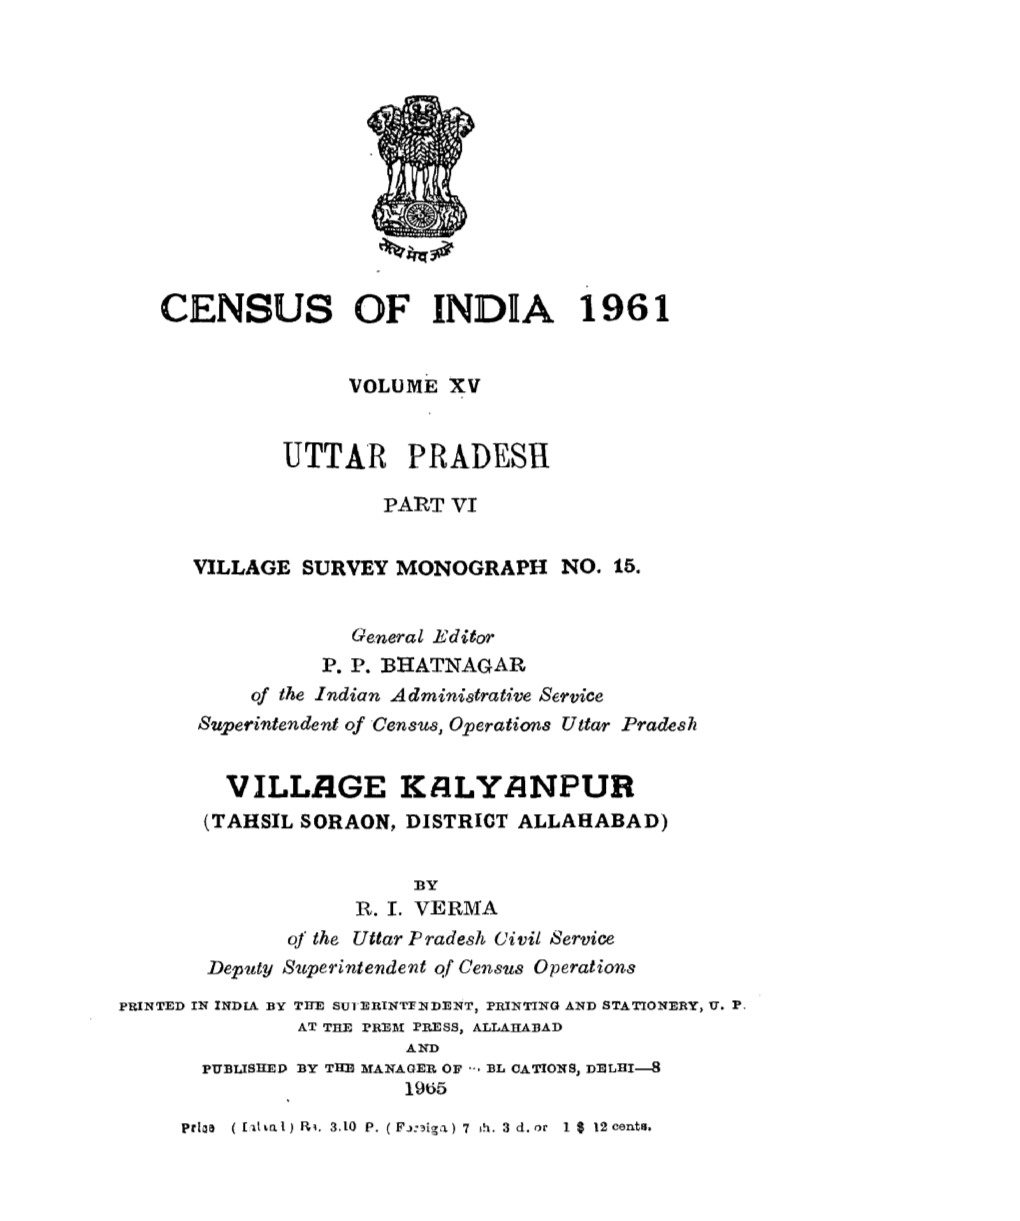 Village Survey Monograph No-15, Village Kalyanpur, Part VI, Vol-XV